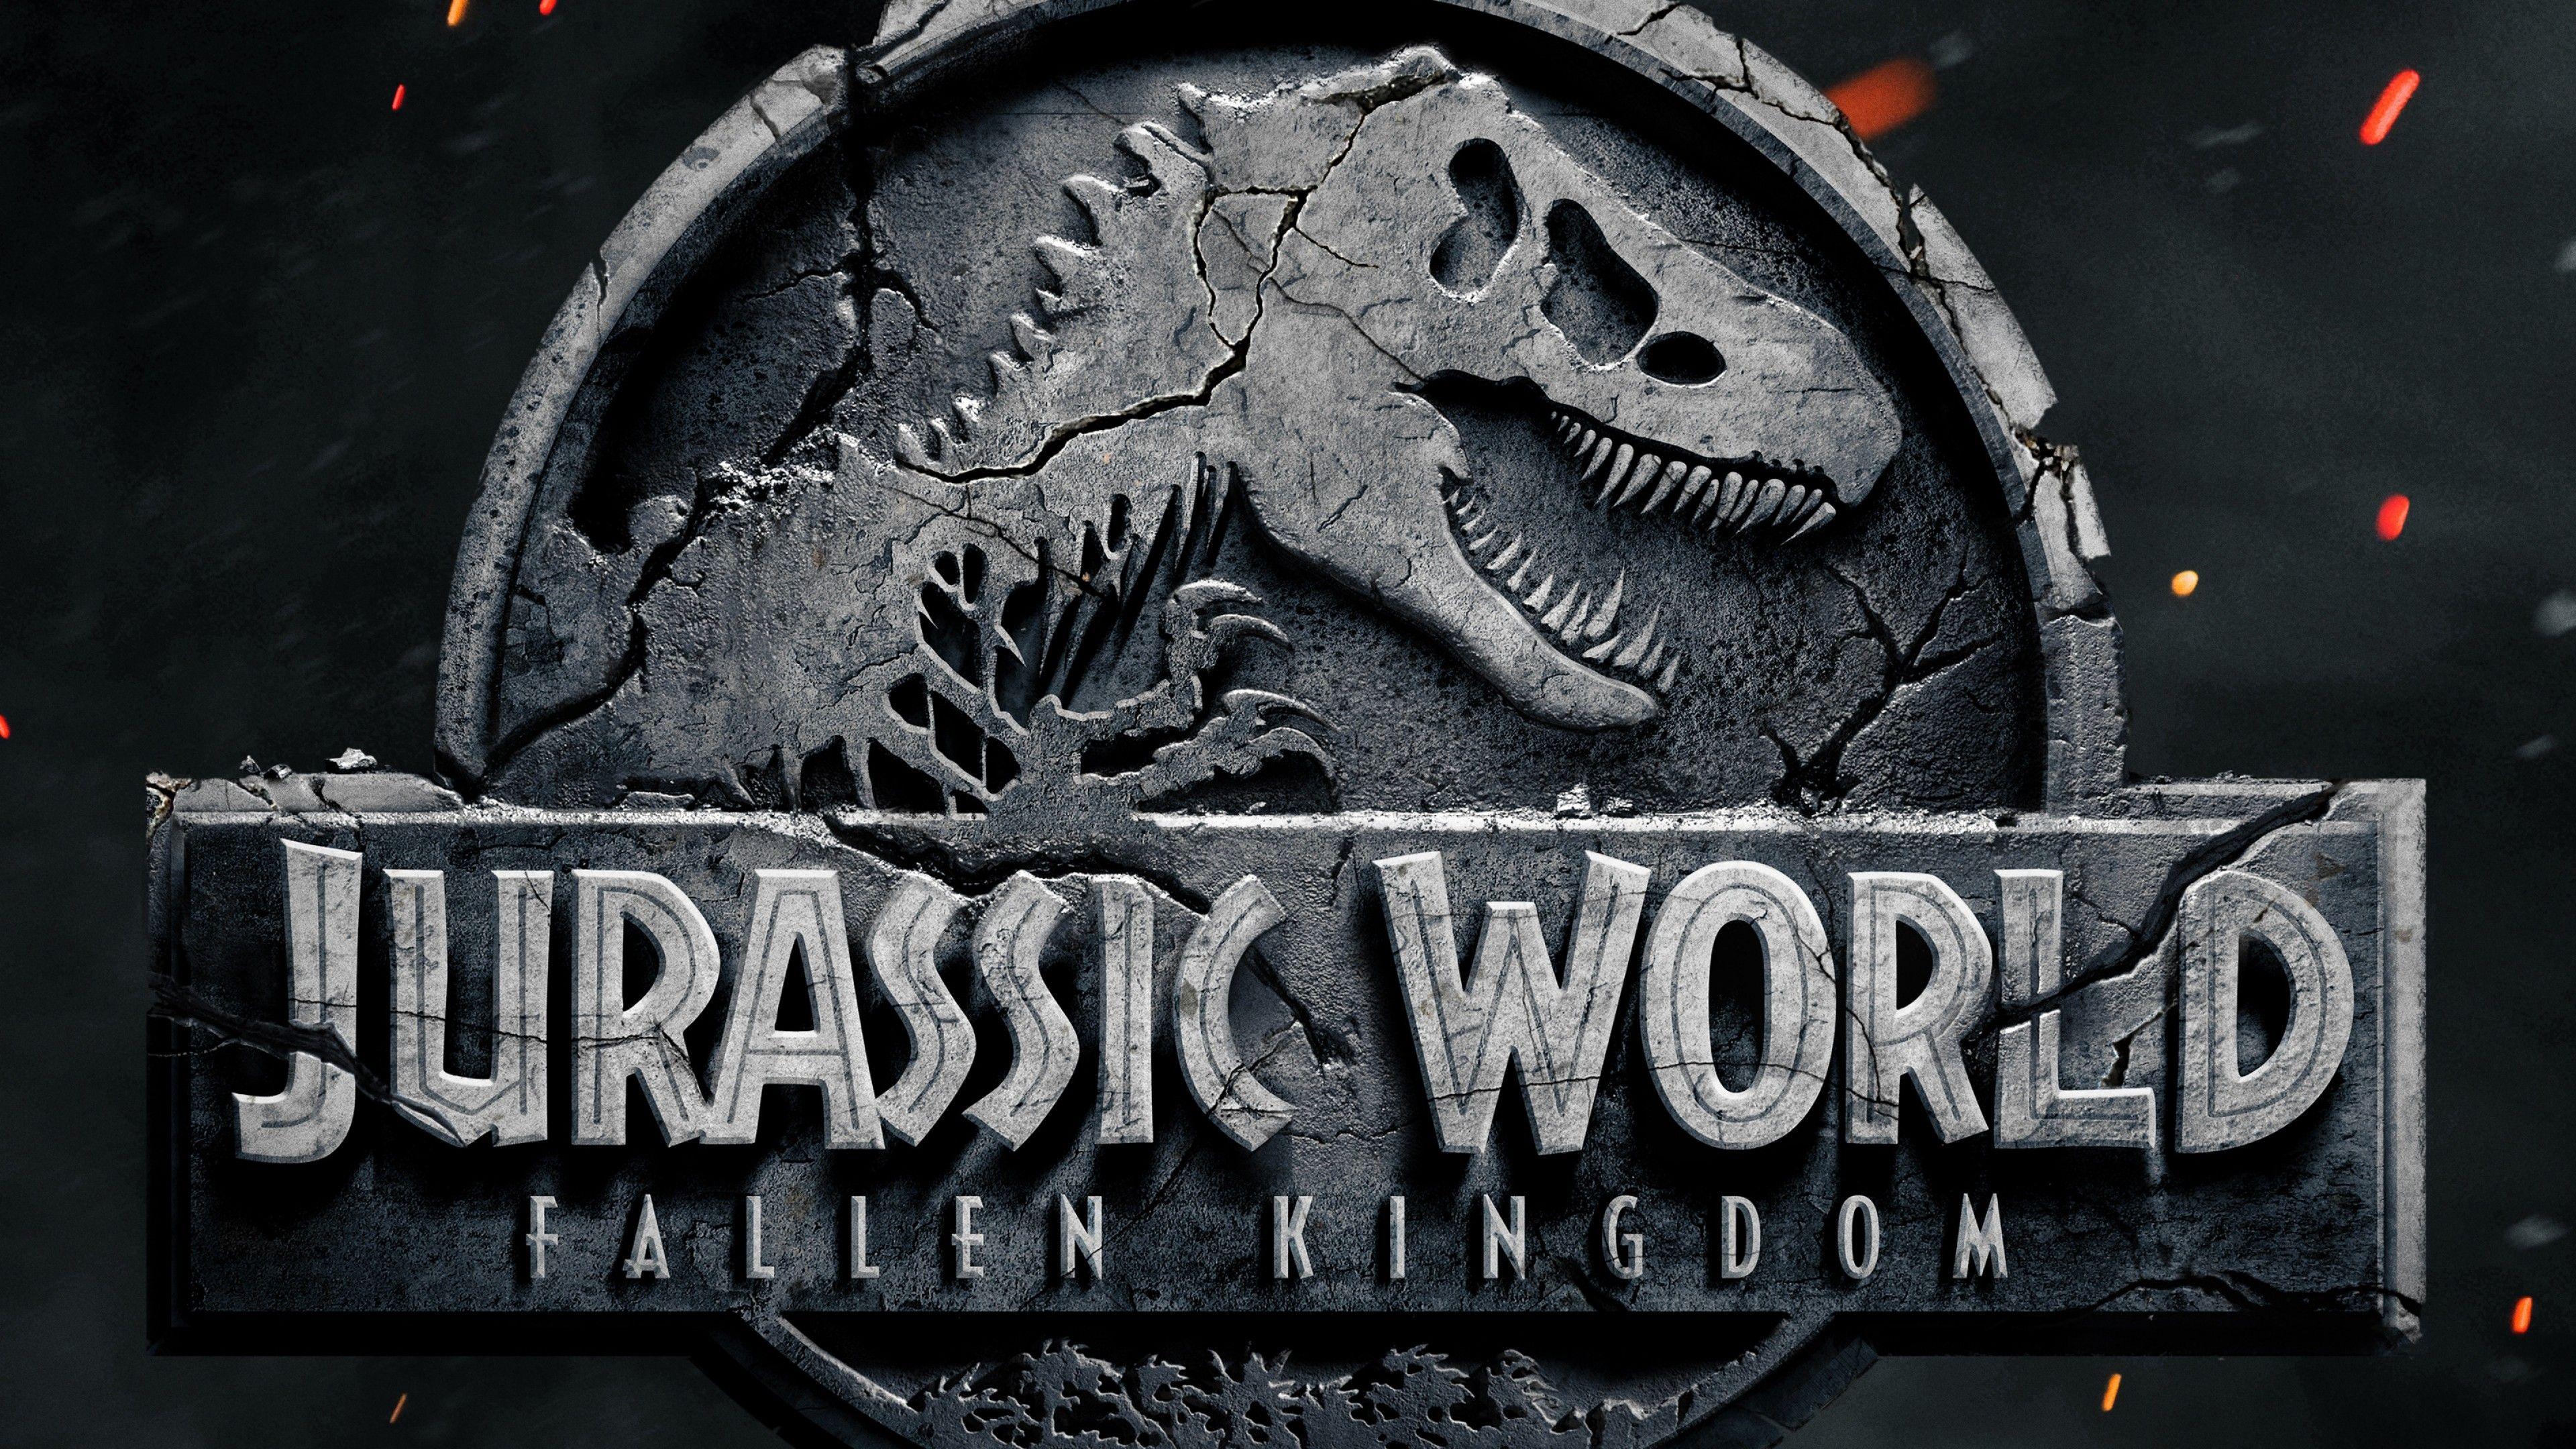 Jurassic World download the new version